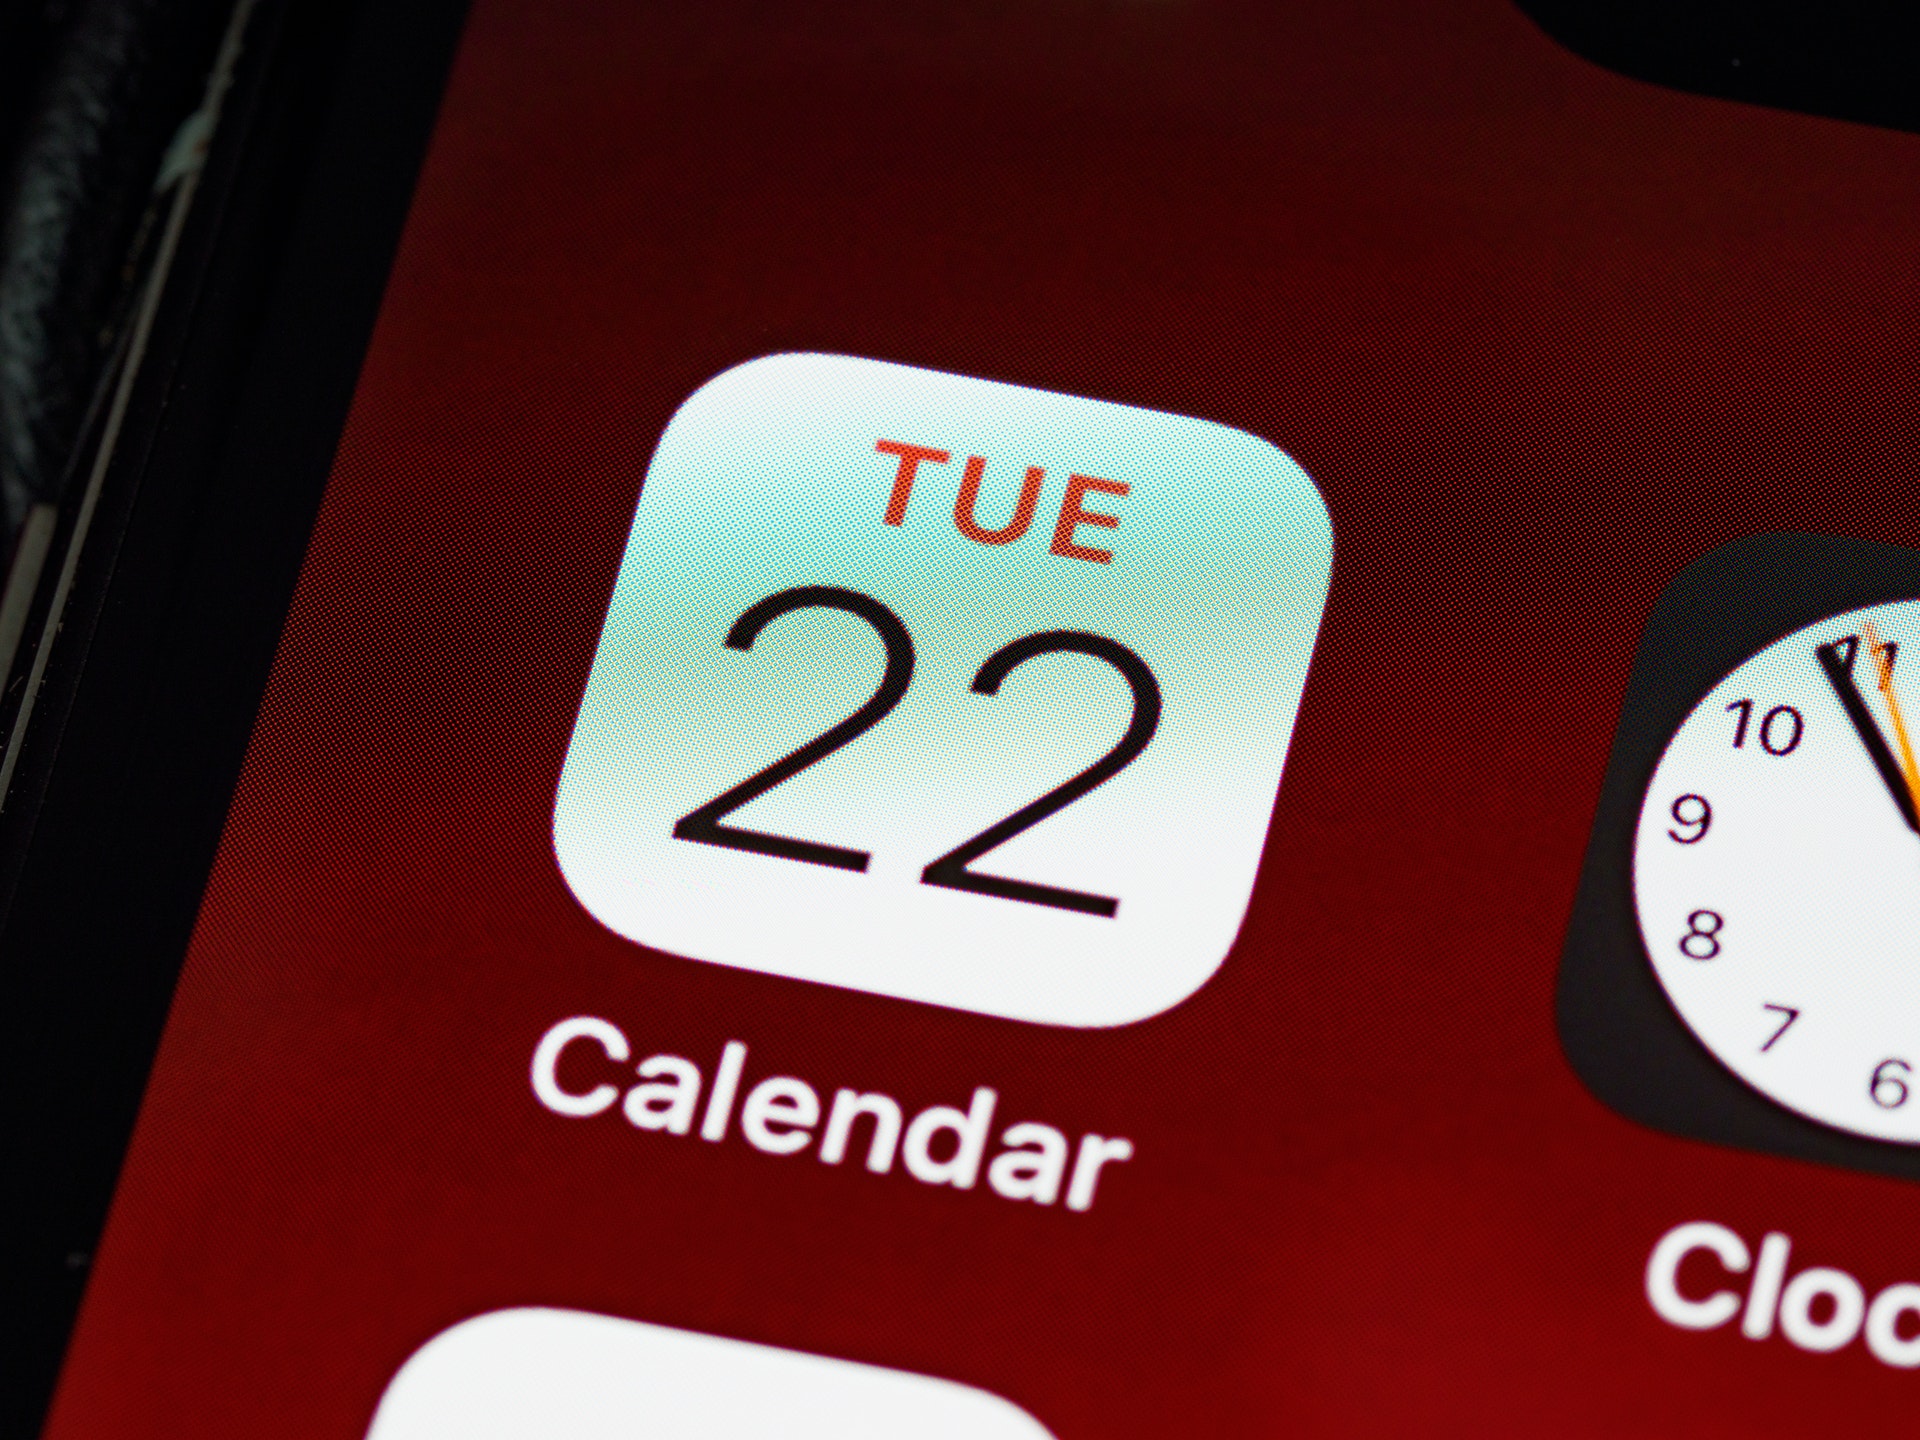 calendar on mobile device